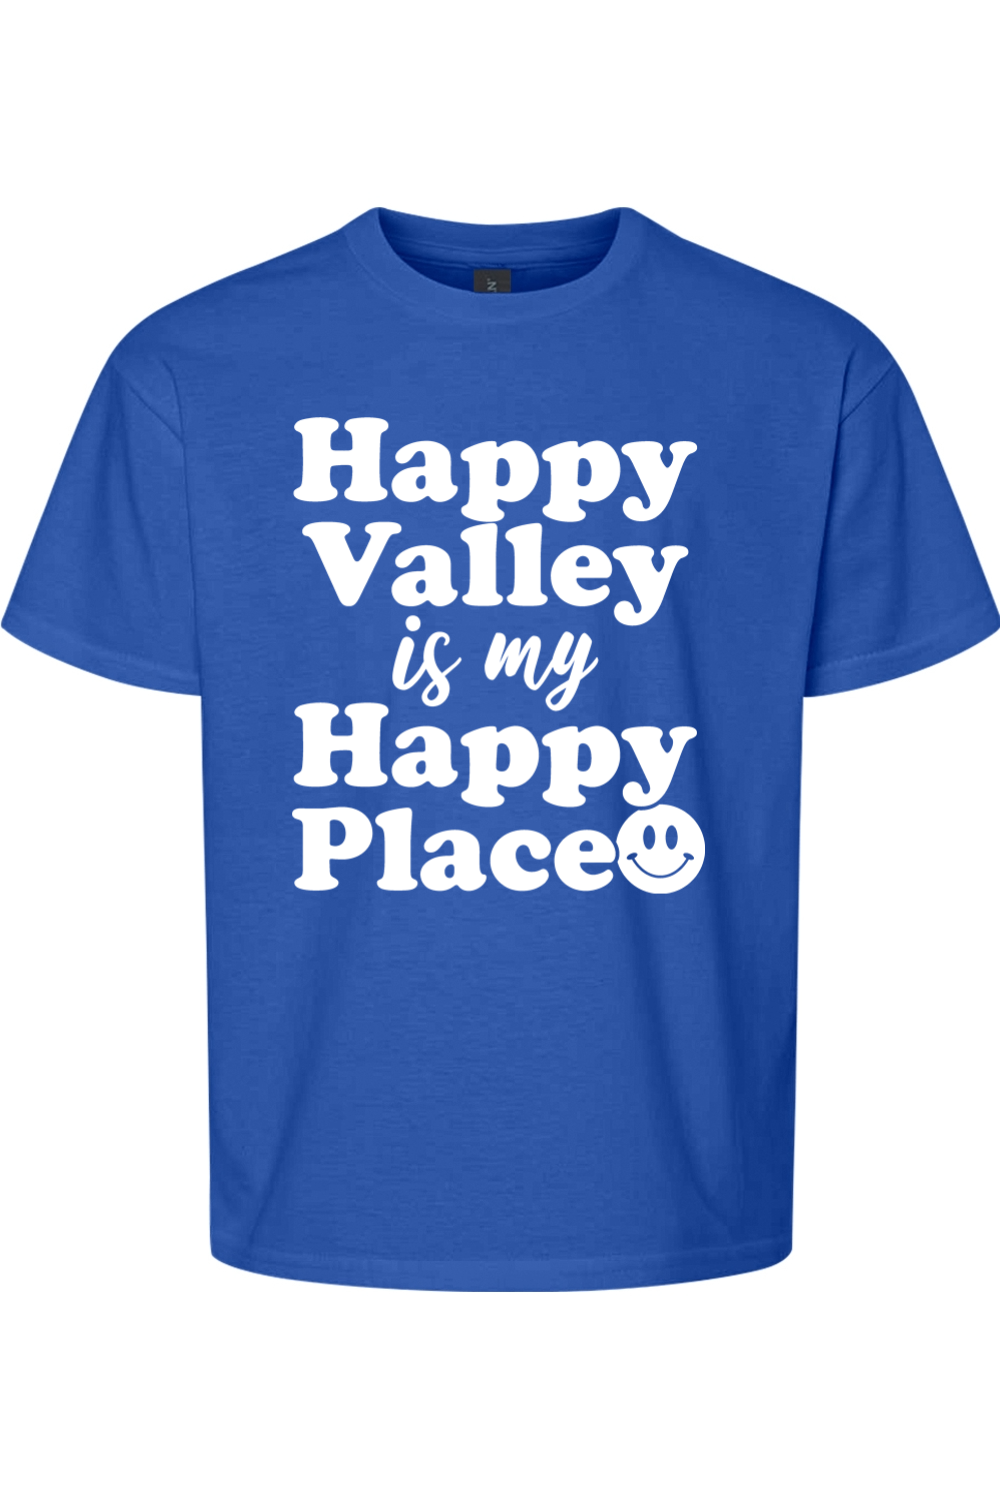 Happy Valley is my Happy Place - Kids Tee - Yinzylvania